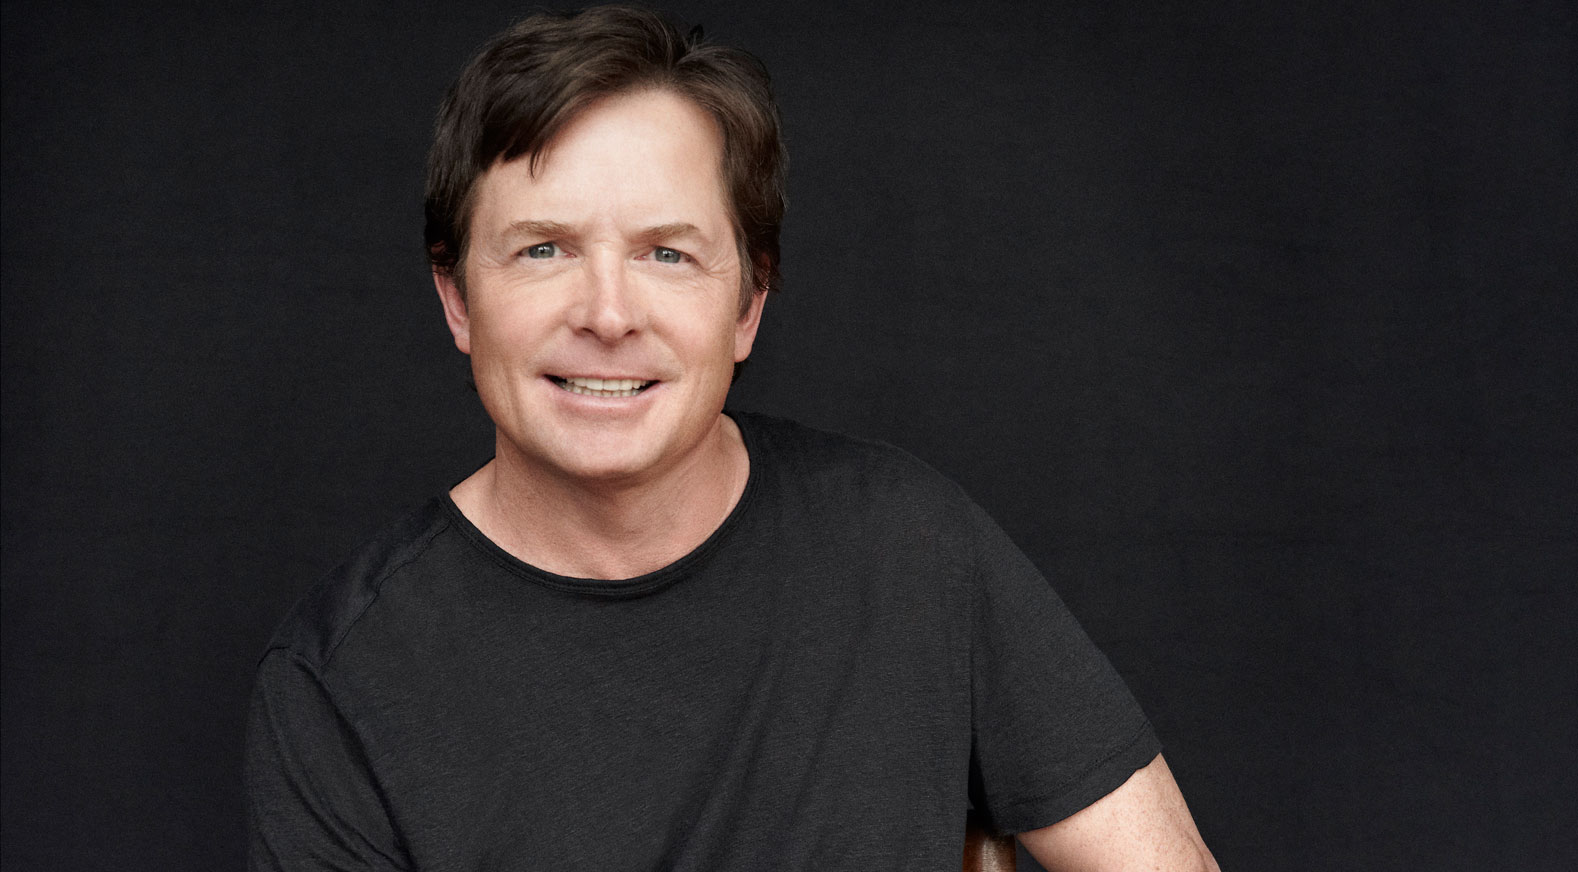 Michael J. Fox net worth